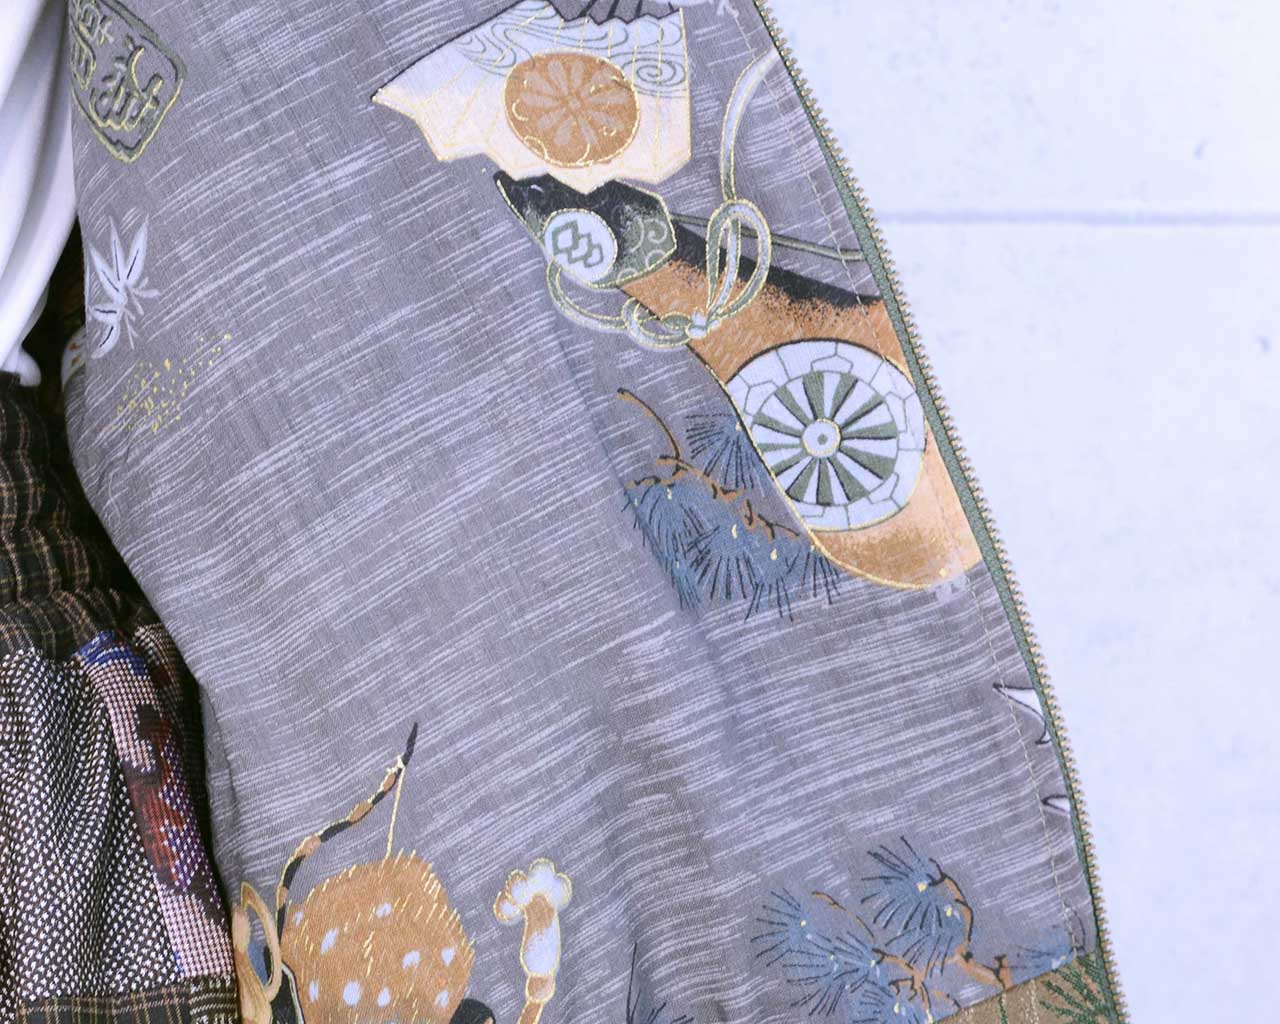 Kimono remake vintage blouson for good luck